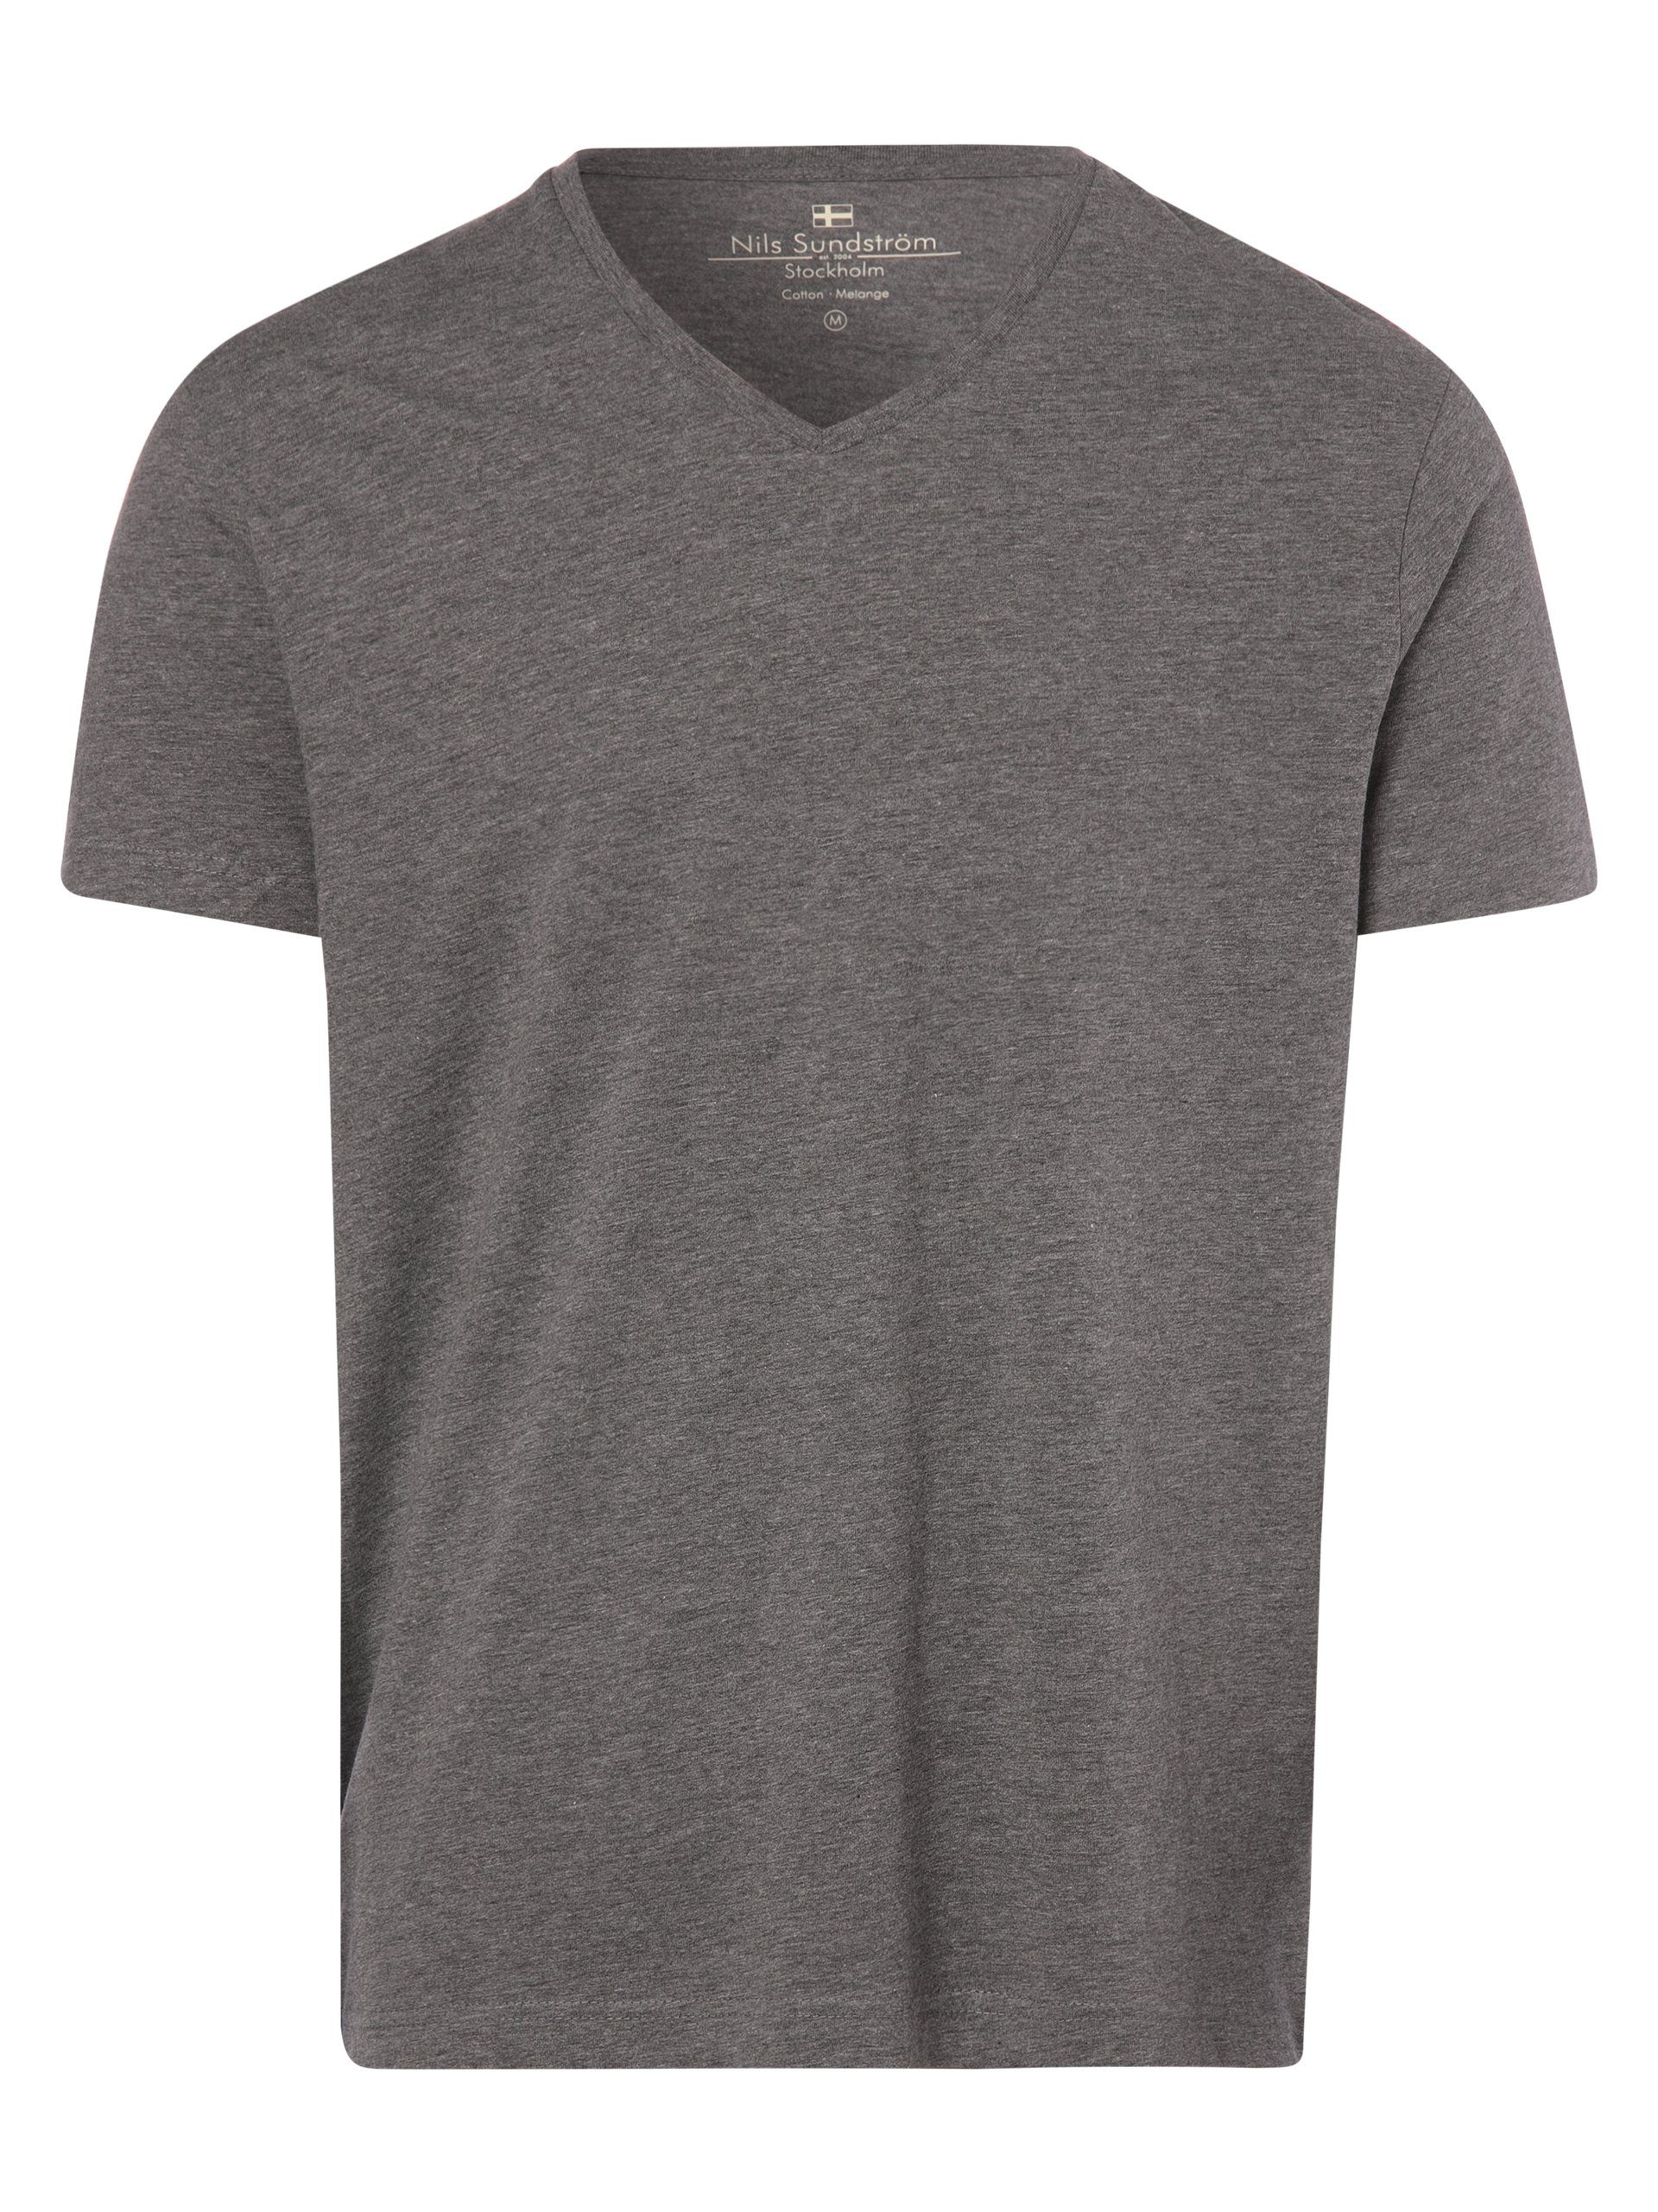 Nils Sundström T-Shirt grau | V-Shirts